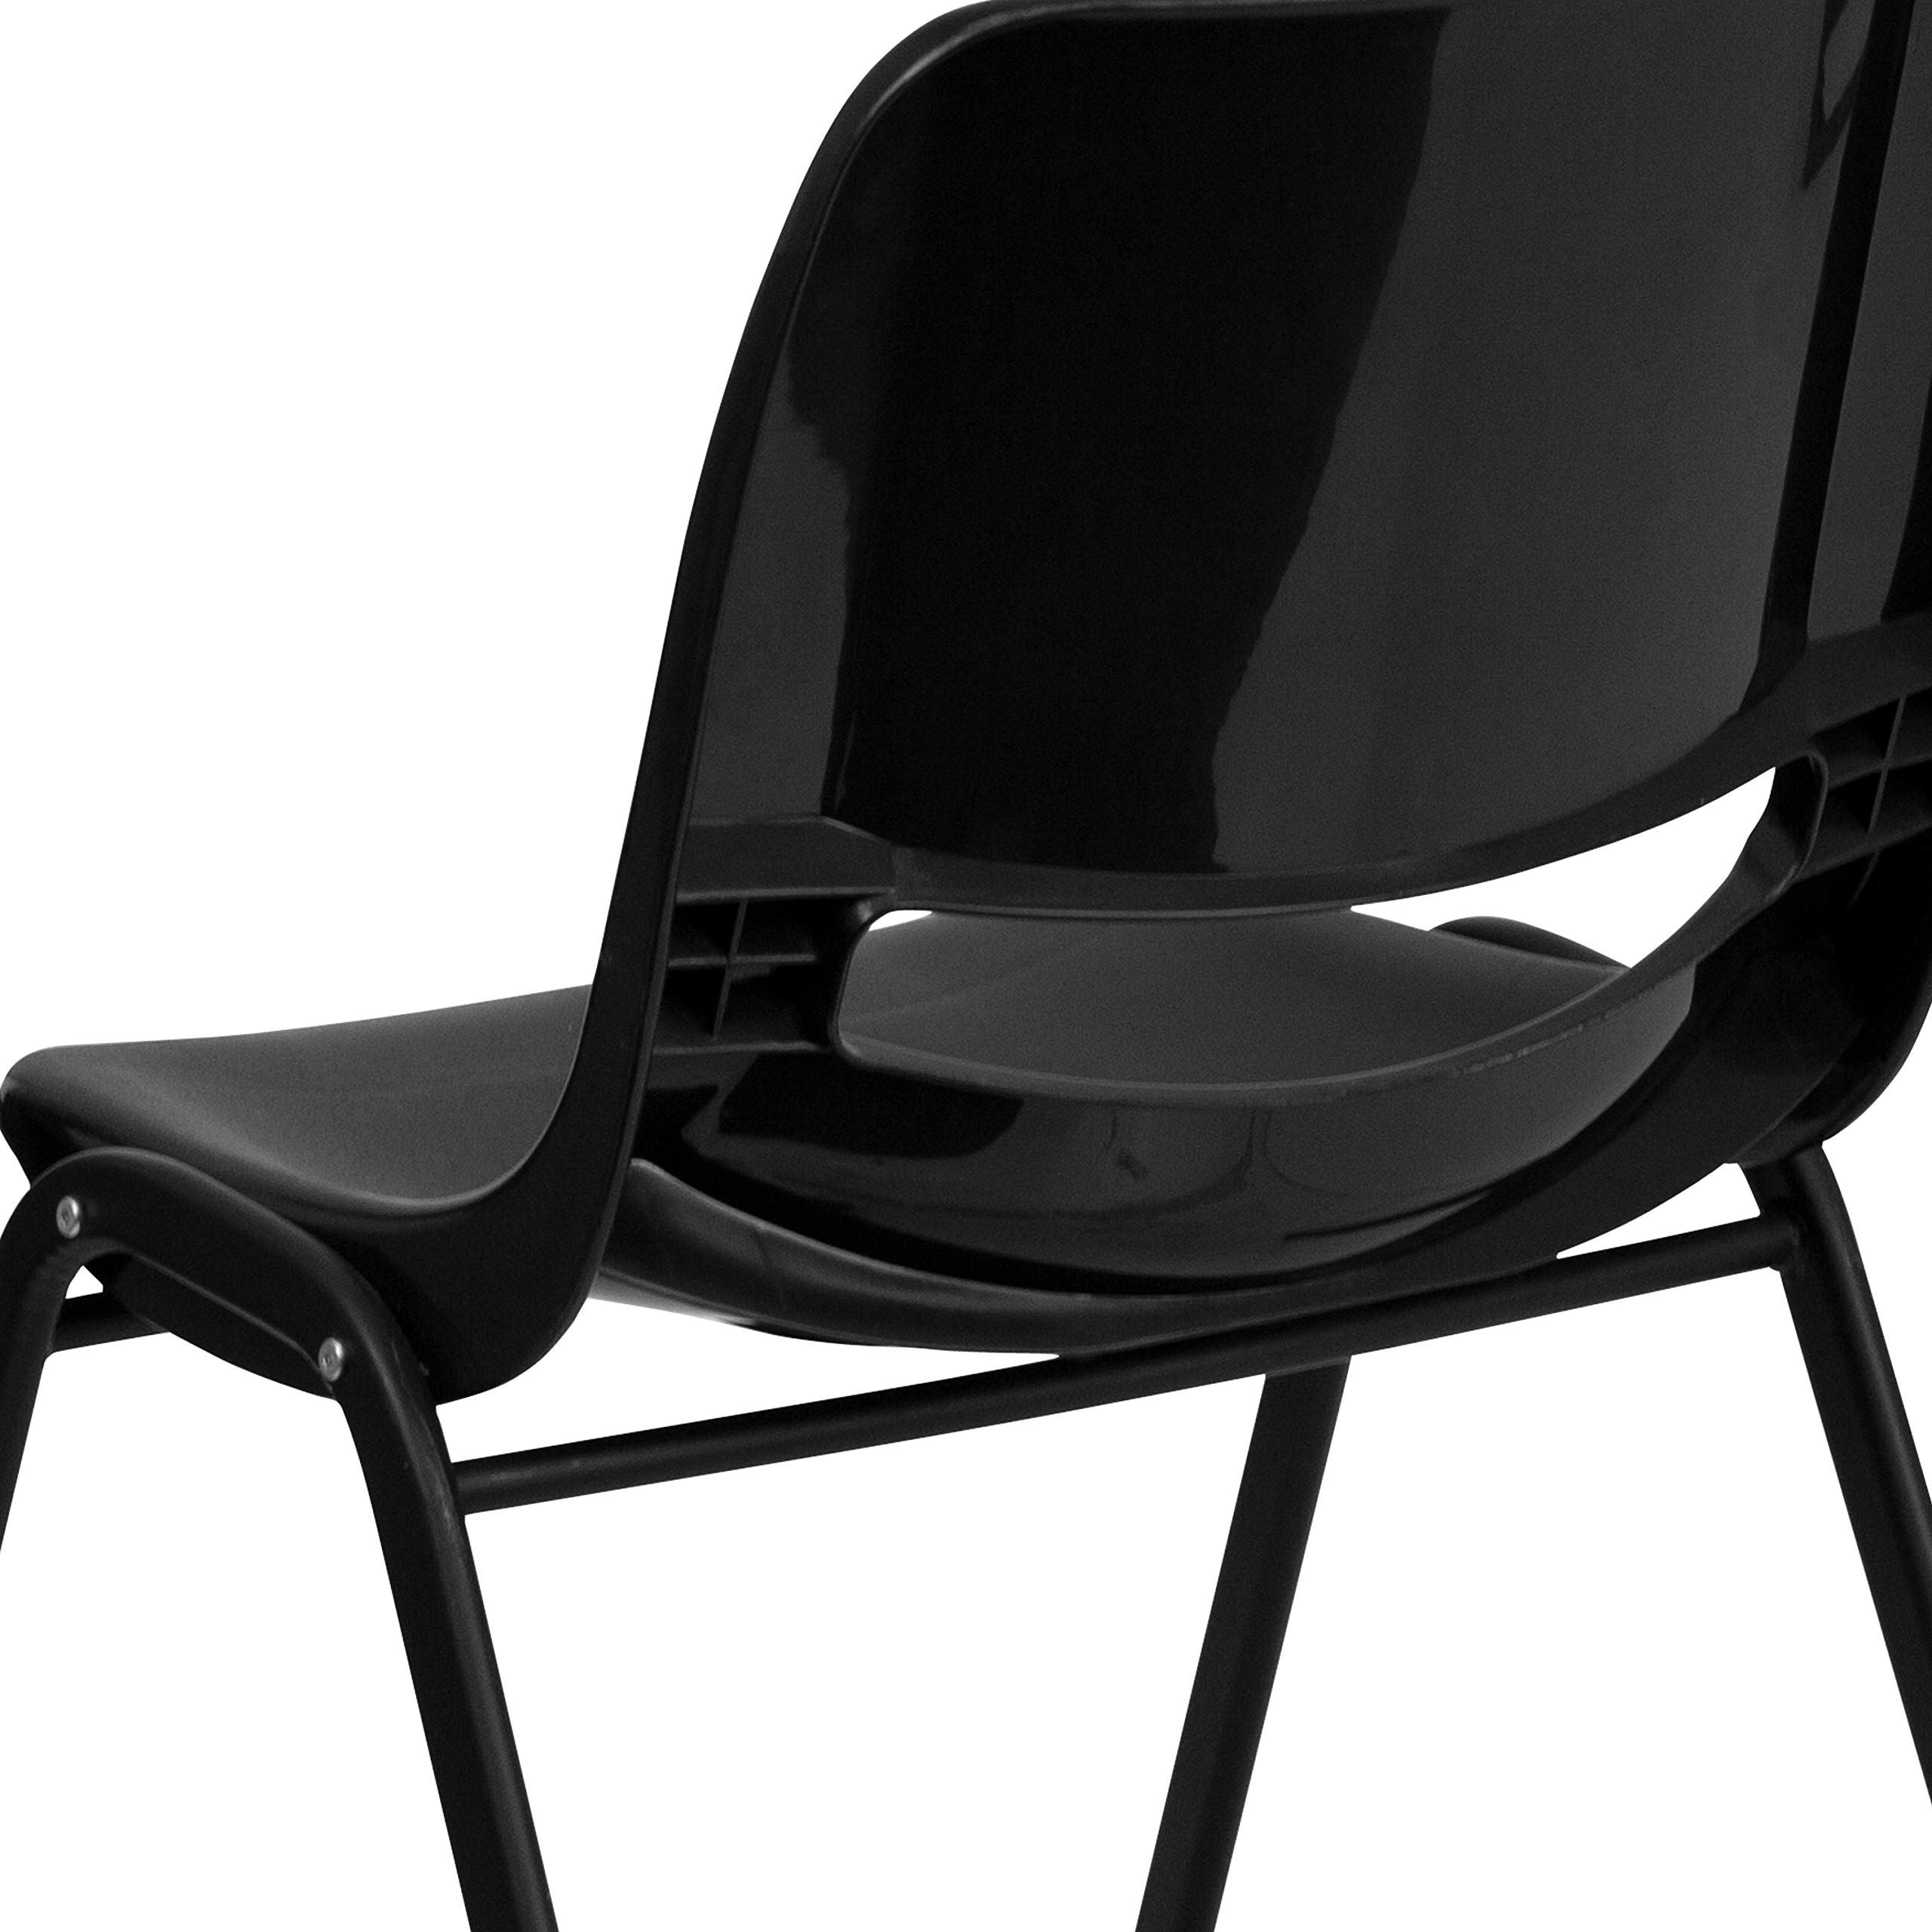 EMMA + OLIVER Kid's Black Ergonomic Shell Stack Chair - Black Frame and 12" H Seat